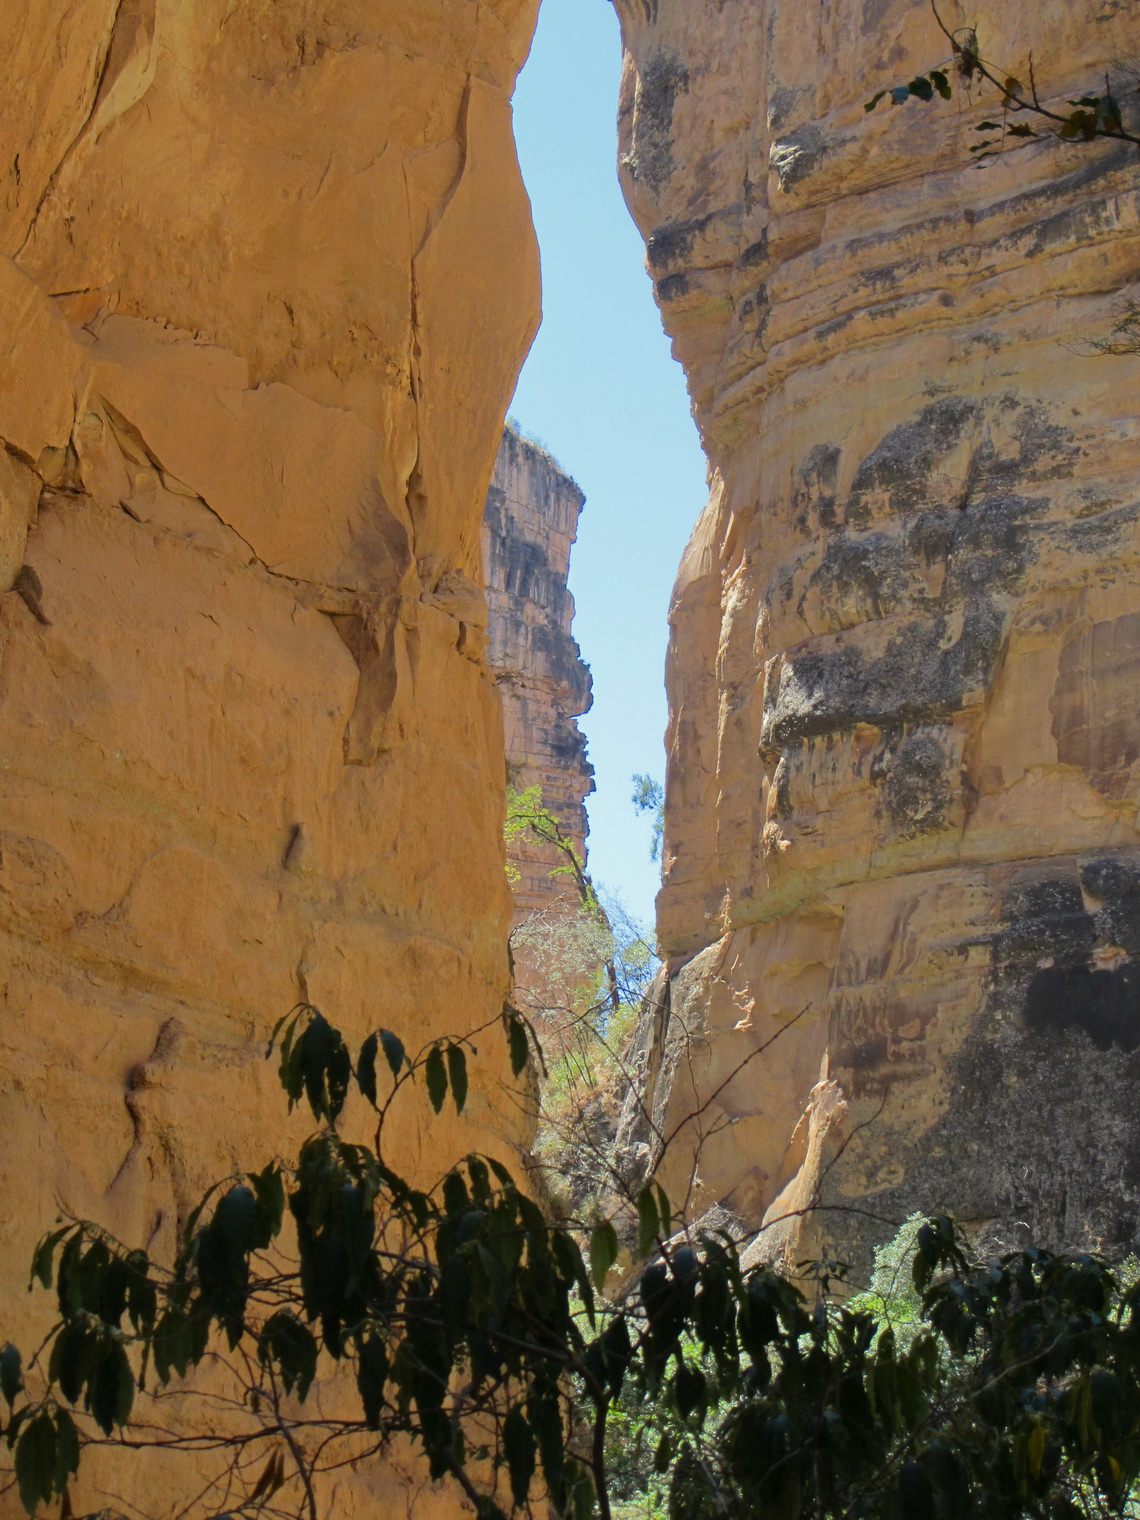 Very steep and narrow canyon